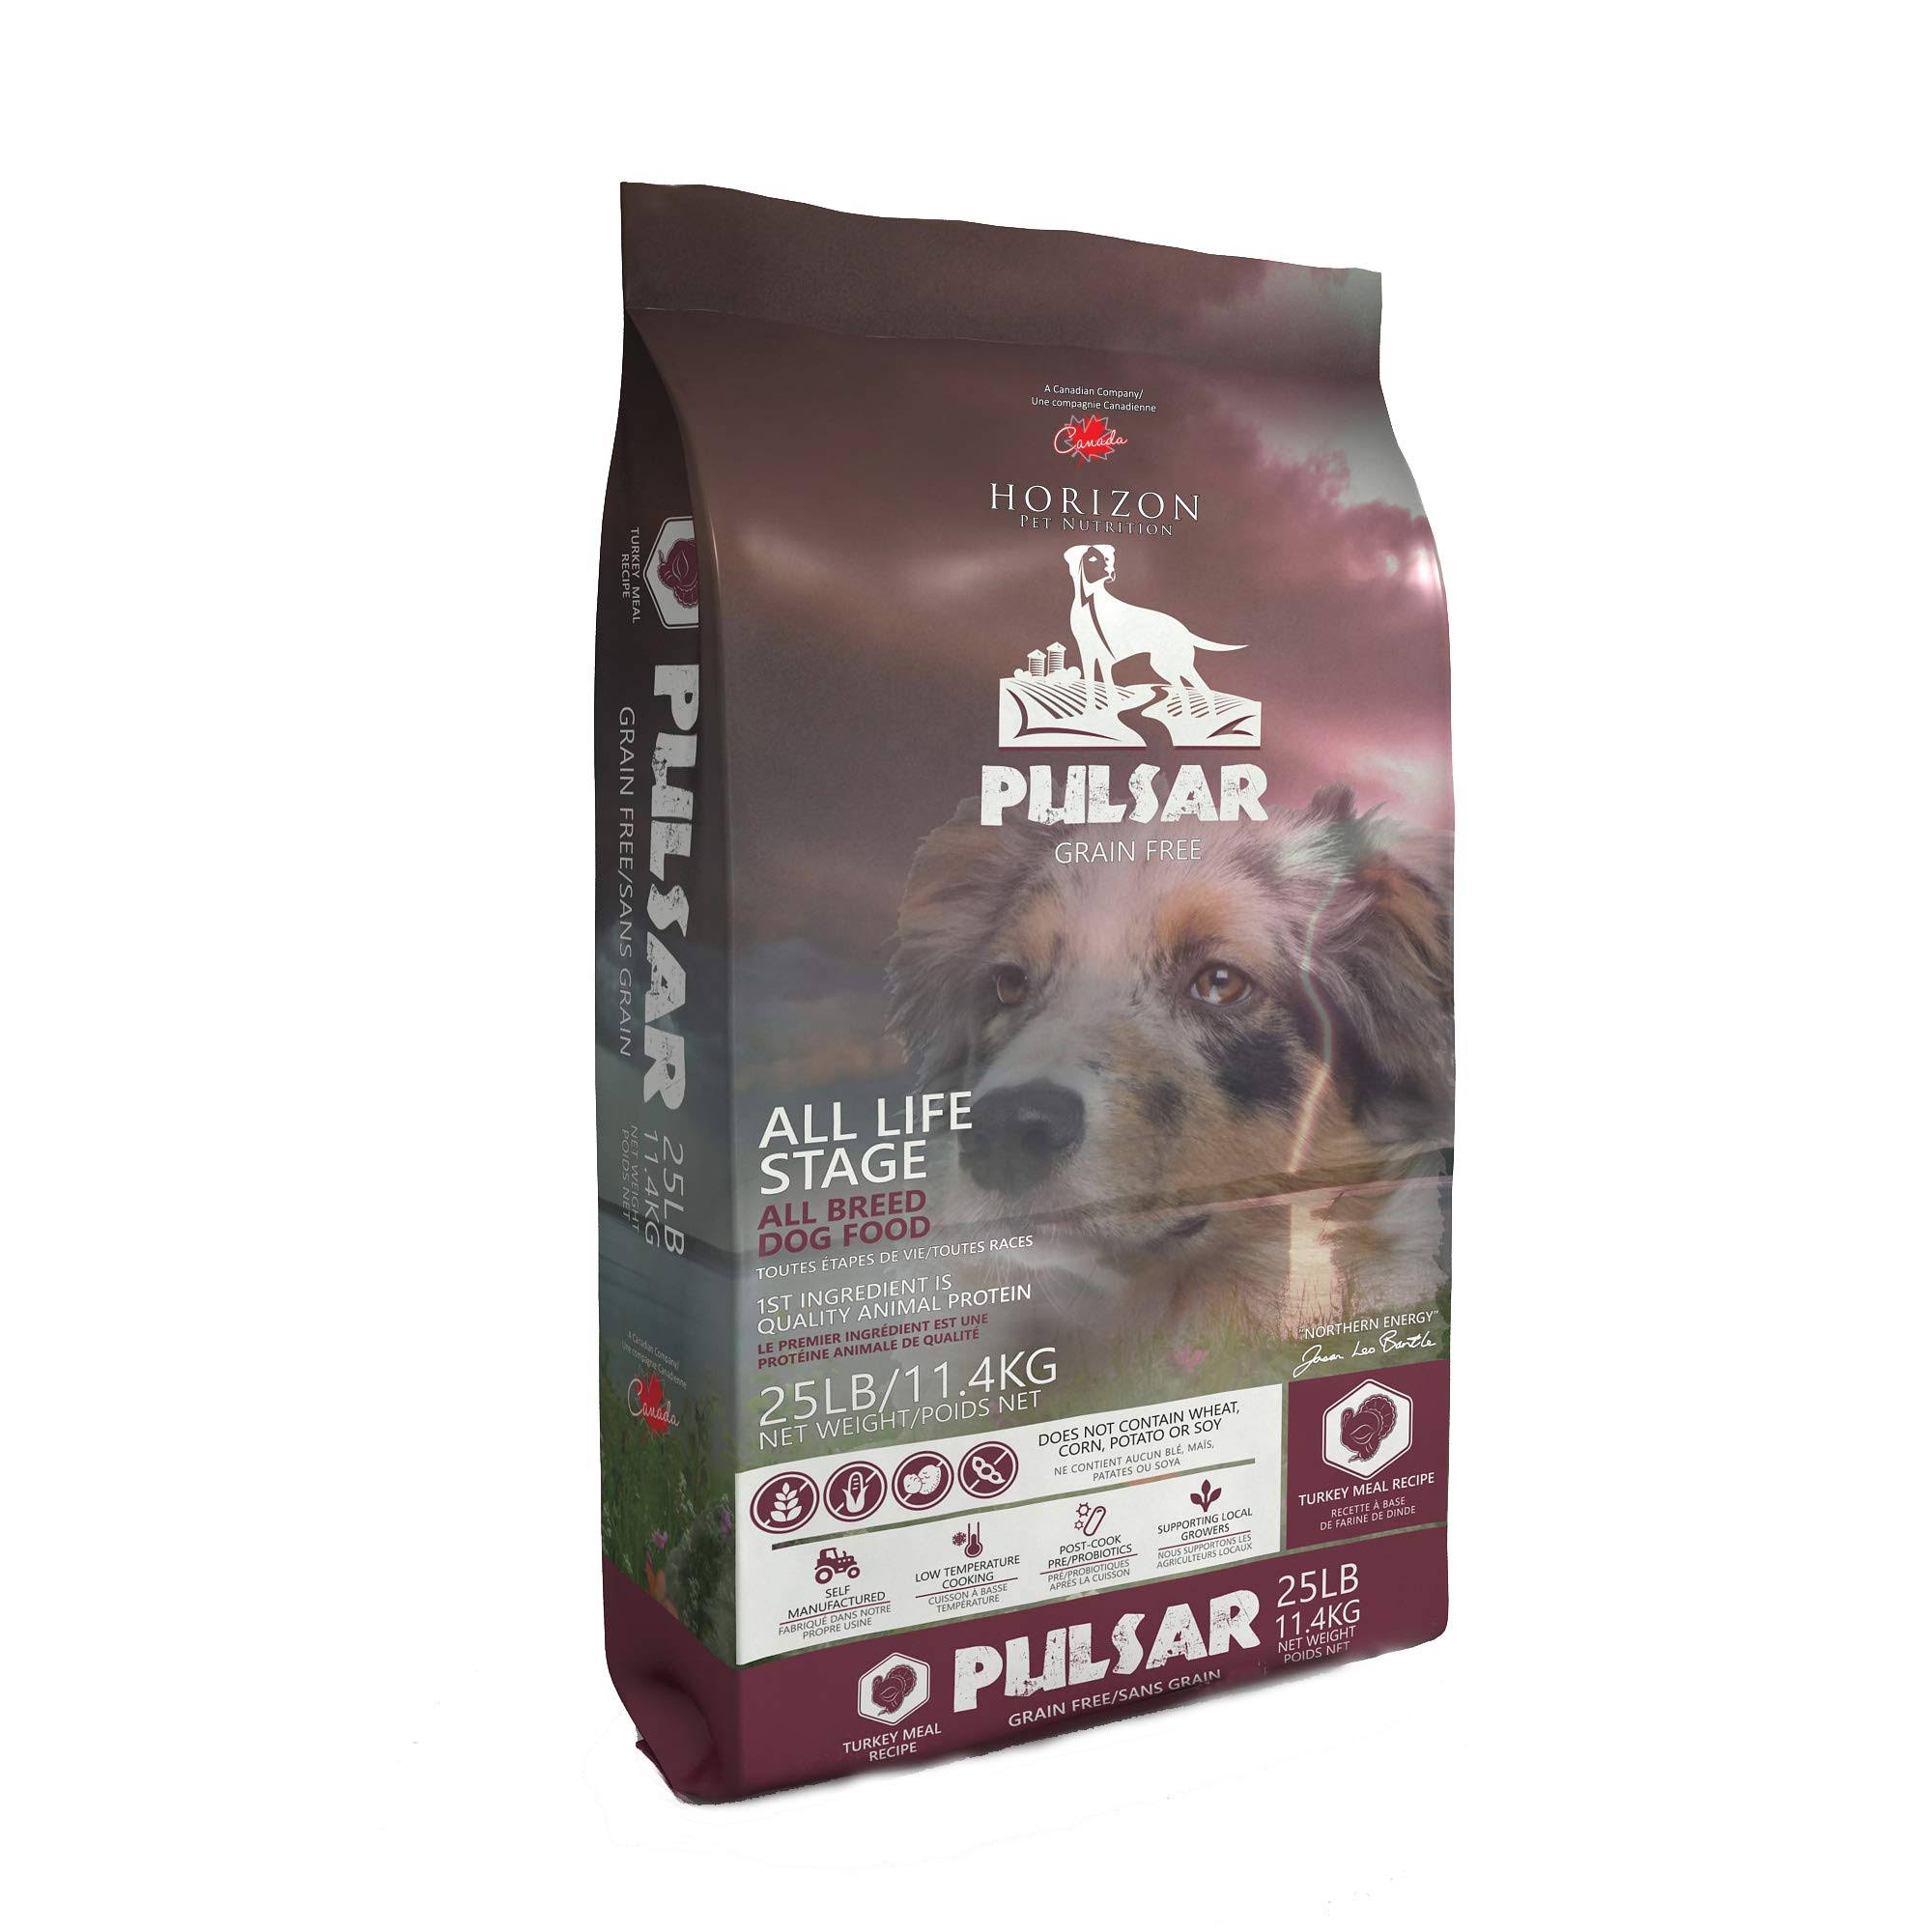 Pulsar Grain-Free Dry Dog Food - Turkey Formula, 8.8lbs